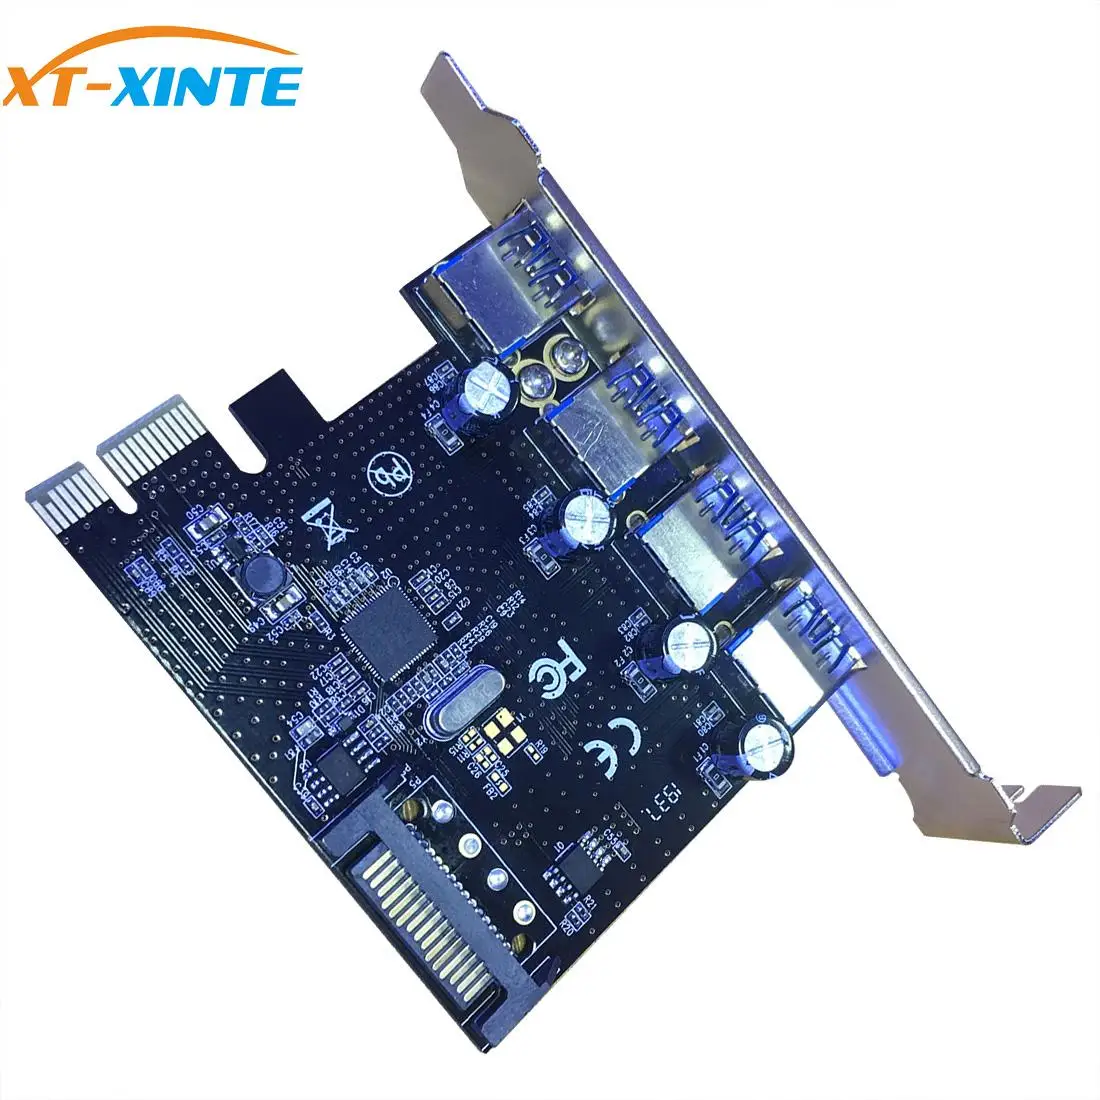 

XT-XINTE PCIe Expansion Card 4Port USB 3.0 To PCI-E Express Card Adapter 15Pin SATA PCIe Riser Card USB3.0 Controller PCI-E 1x